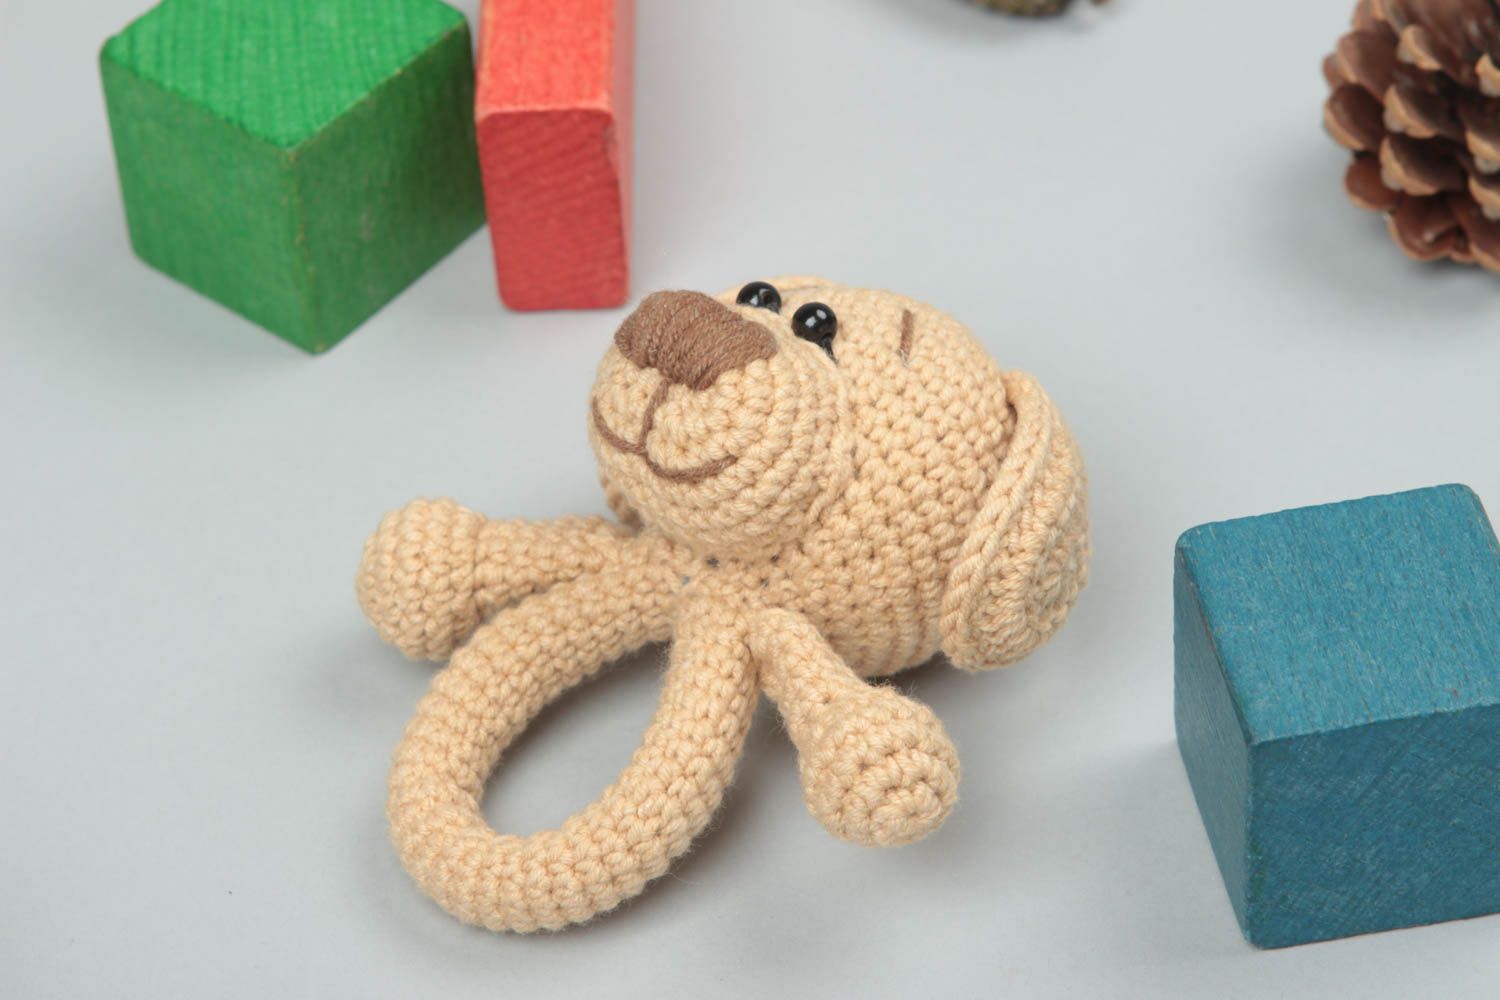 Handmade crochet toy childrens toys cute toy rattle birthday gift ideas photo 1